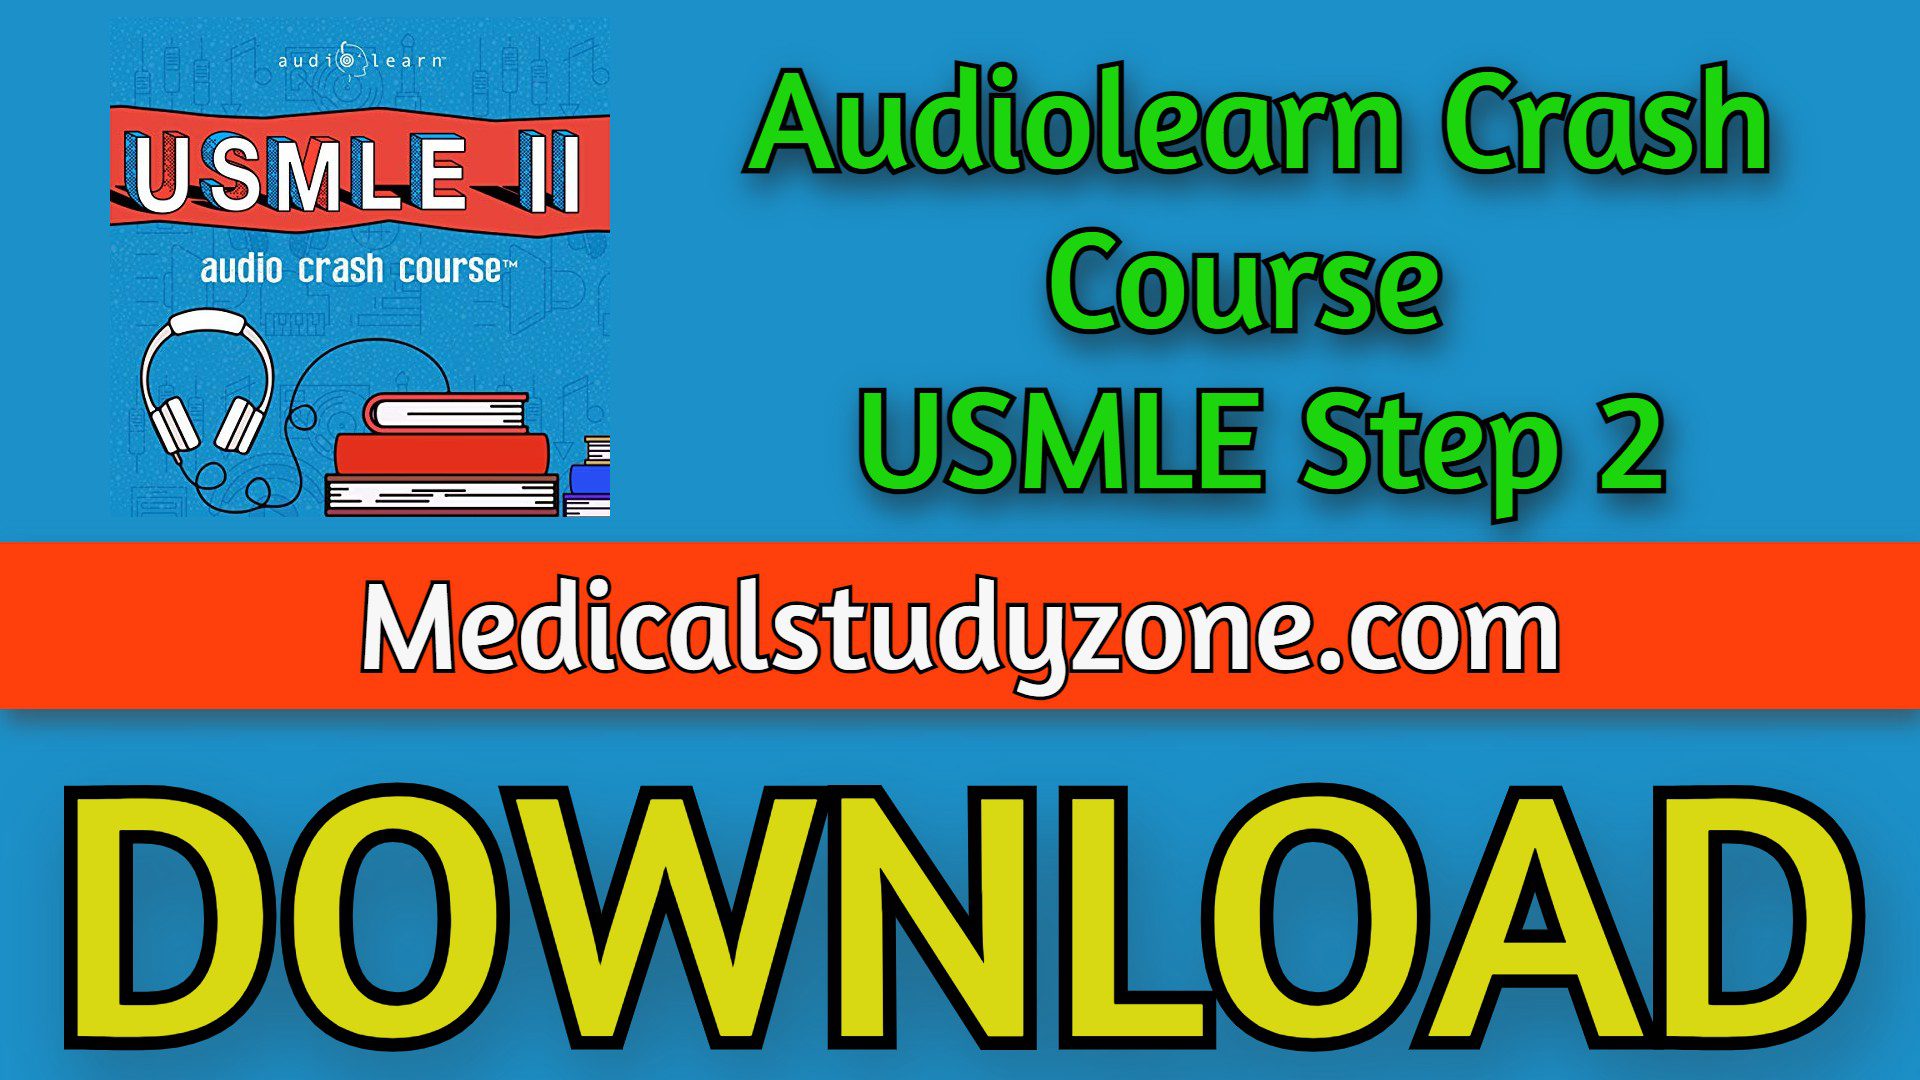 Audiolearn Crash Course USMLE Step 2 2021 Free Download